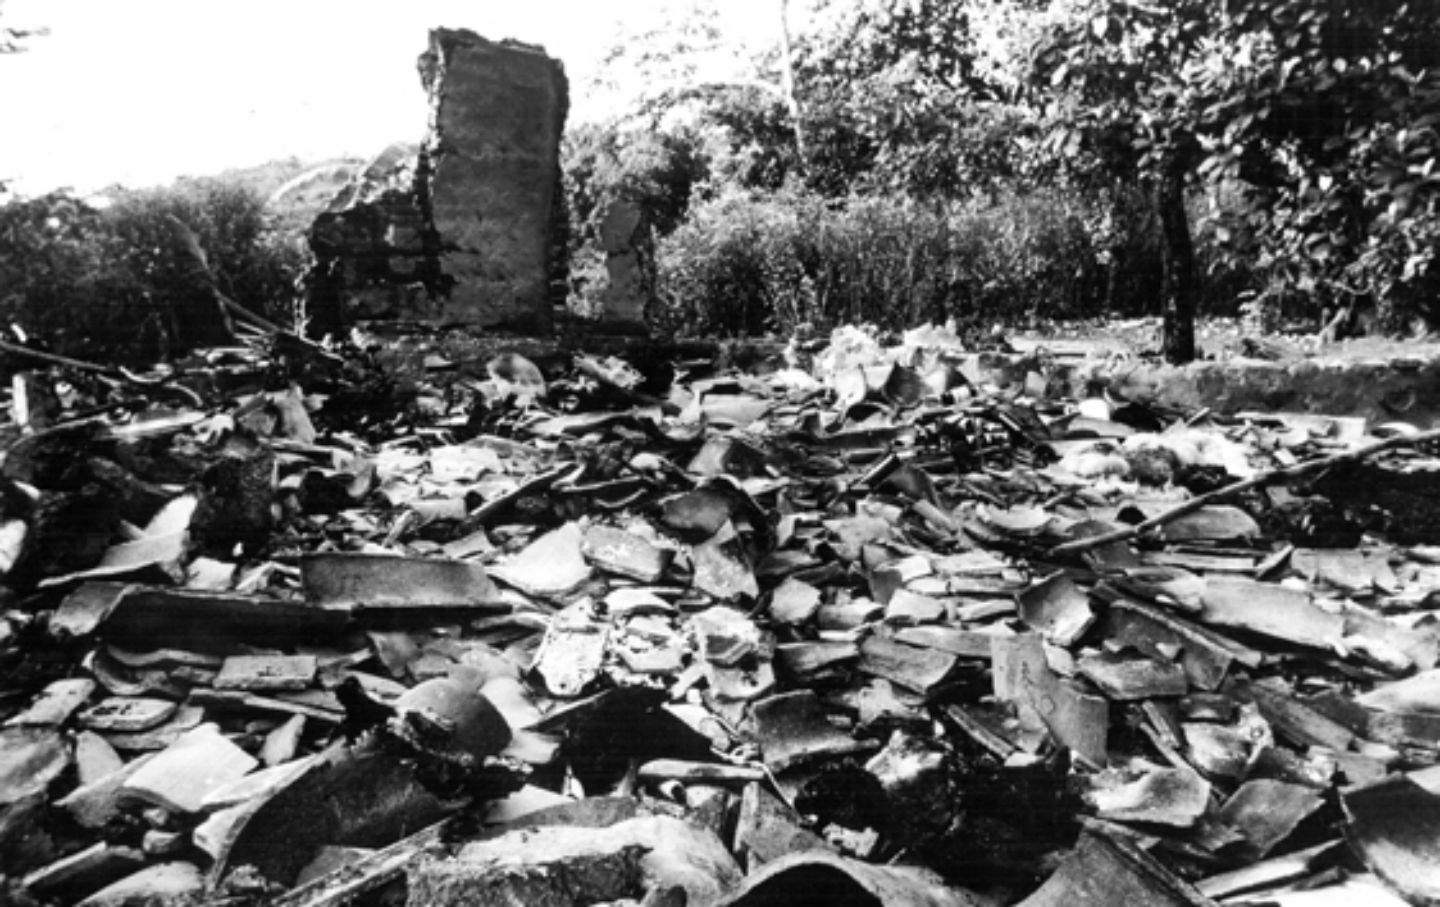 December 11, 1981: The Salvadoran Army Murders More Than 800 Civilians in El Mozote